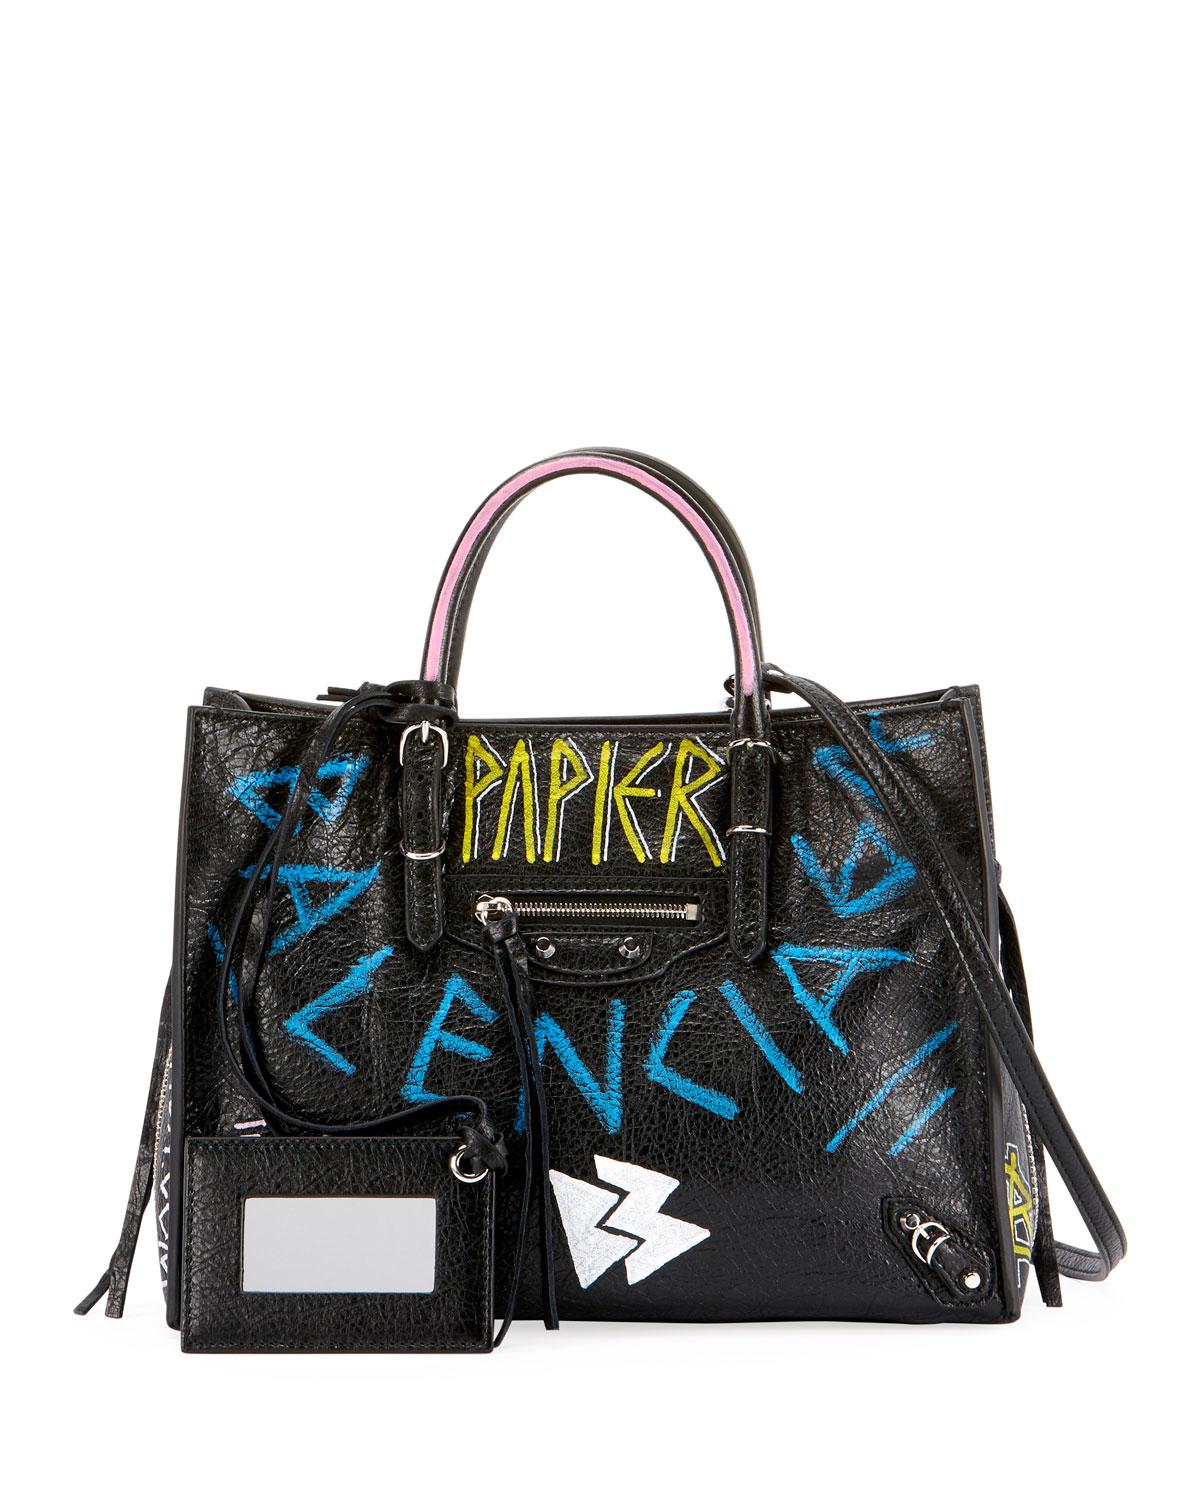 Lauren Conrad and her Balenciaga Bag Prove That Sometimes Stars are Just  Like Us  PurseBlog